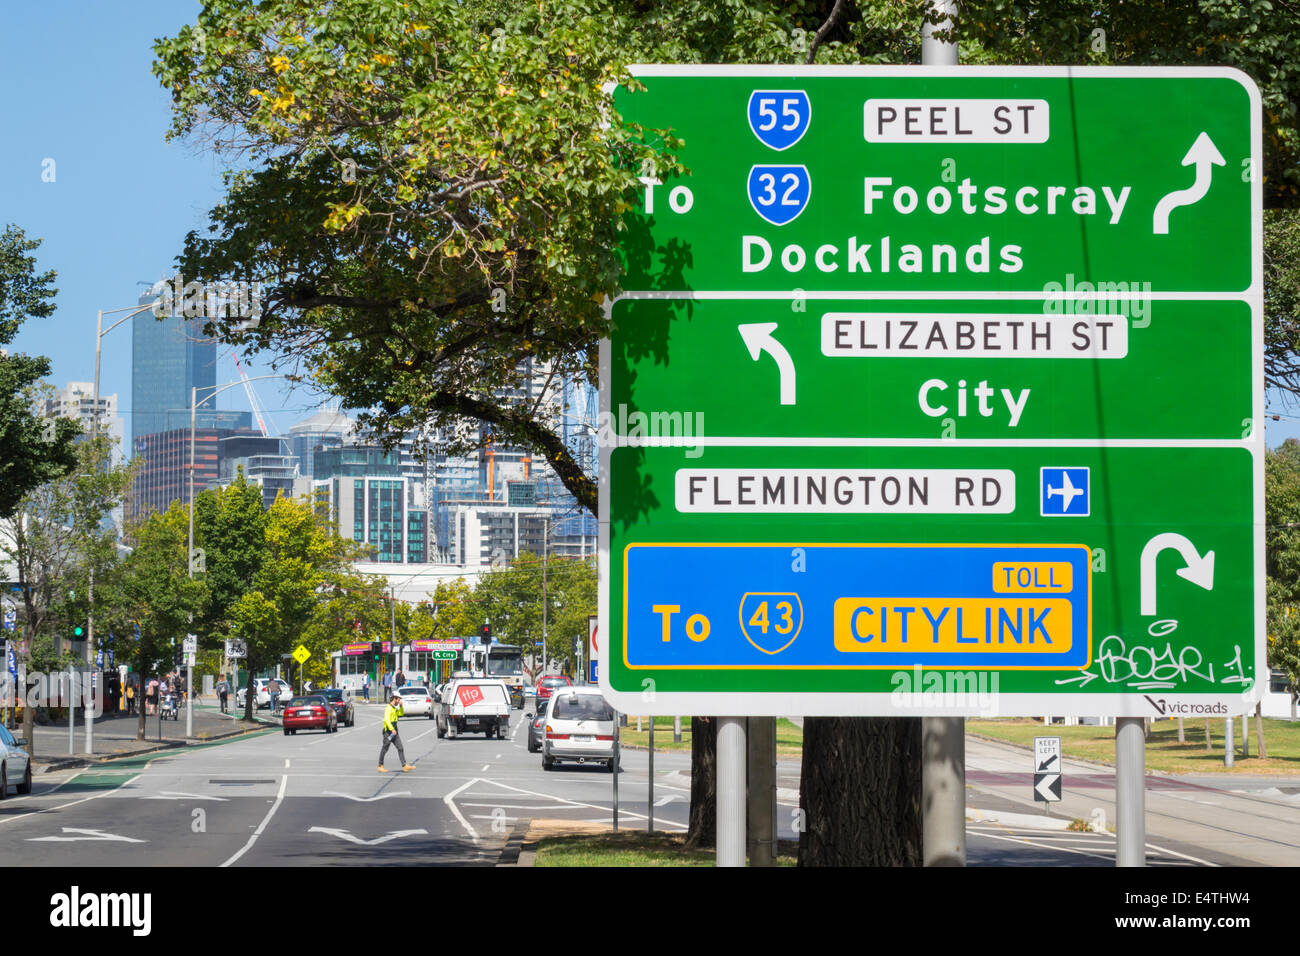 Melbourne Australien, Verkehrsschild, Straße, Peel, Elizabeth Street, Wegbeschreibungen, Pfeile, AU140319012 Stockfoto